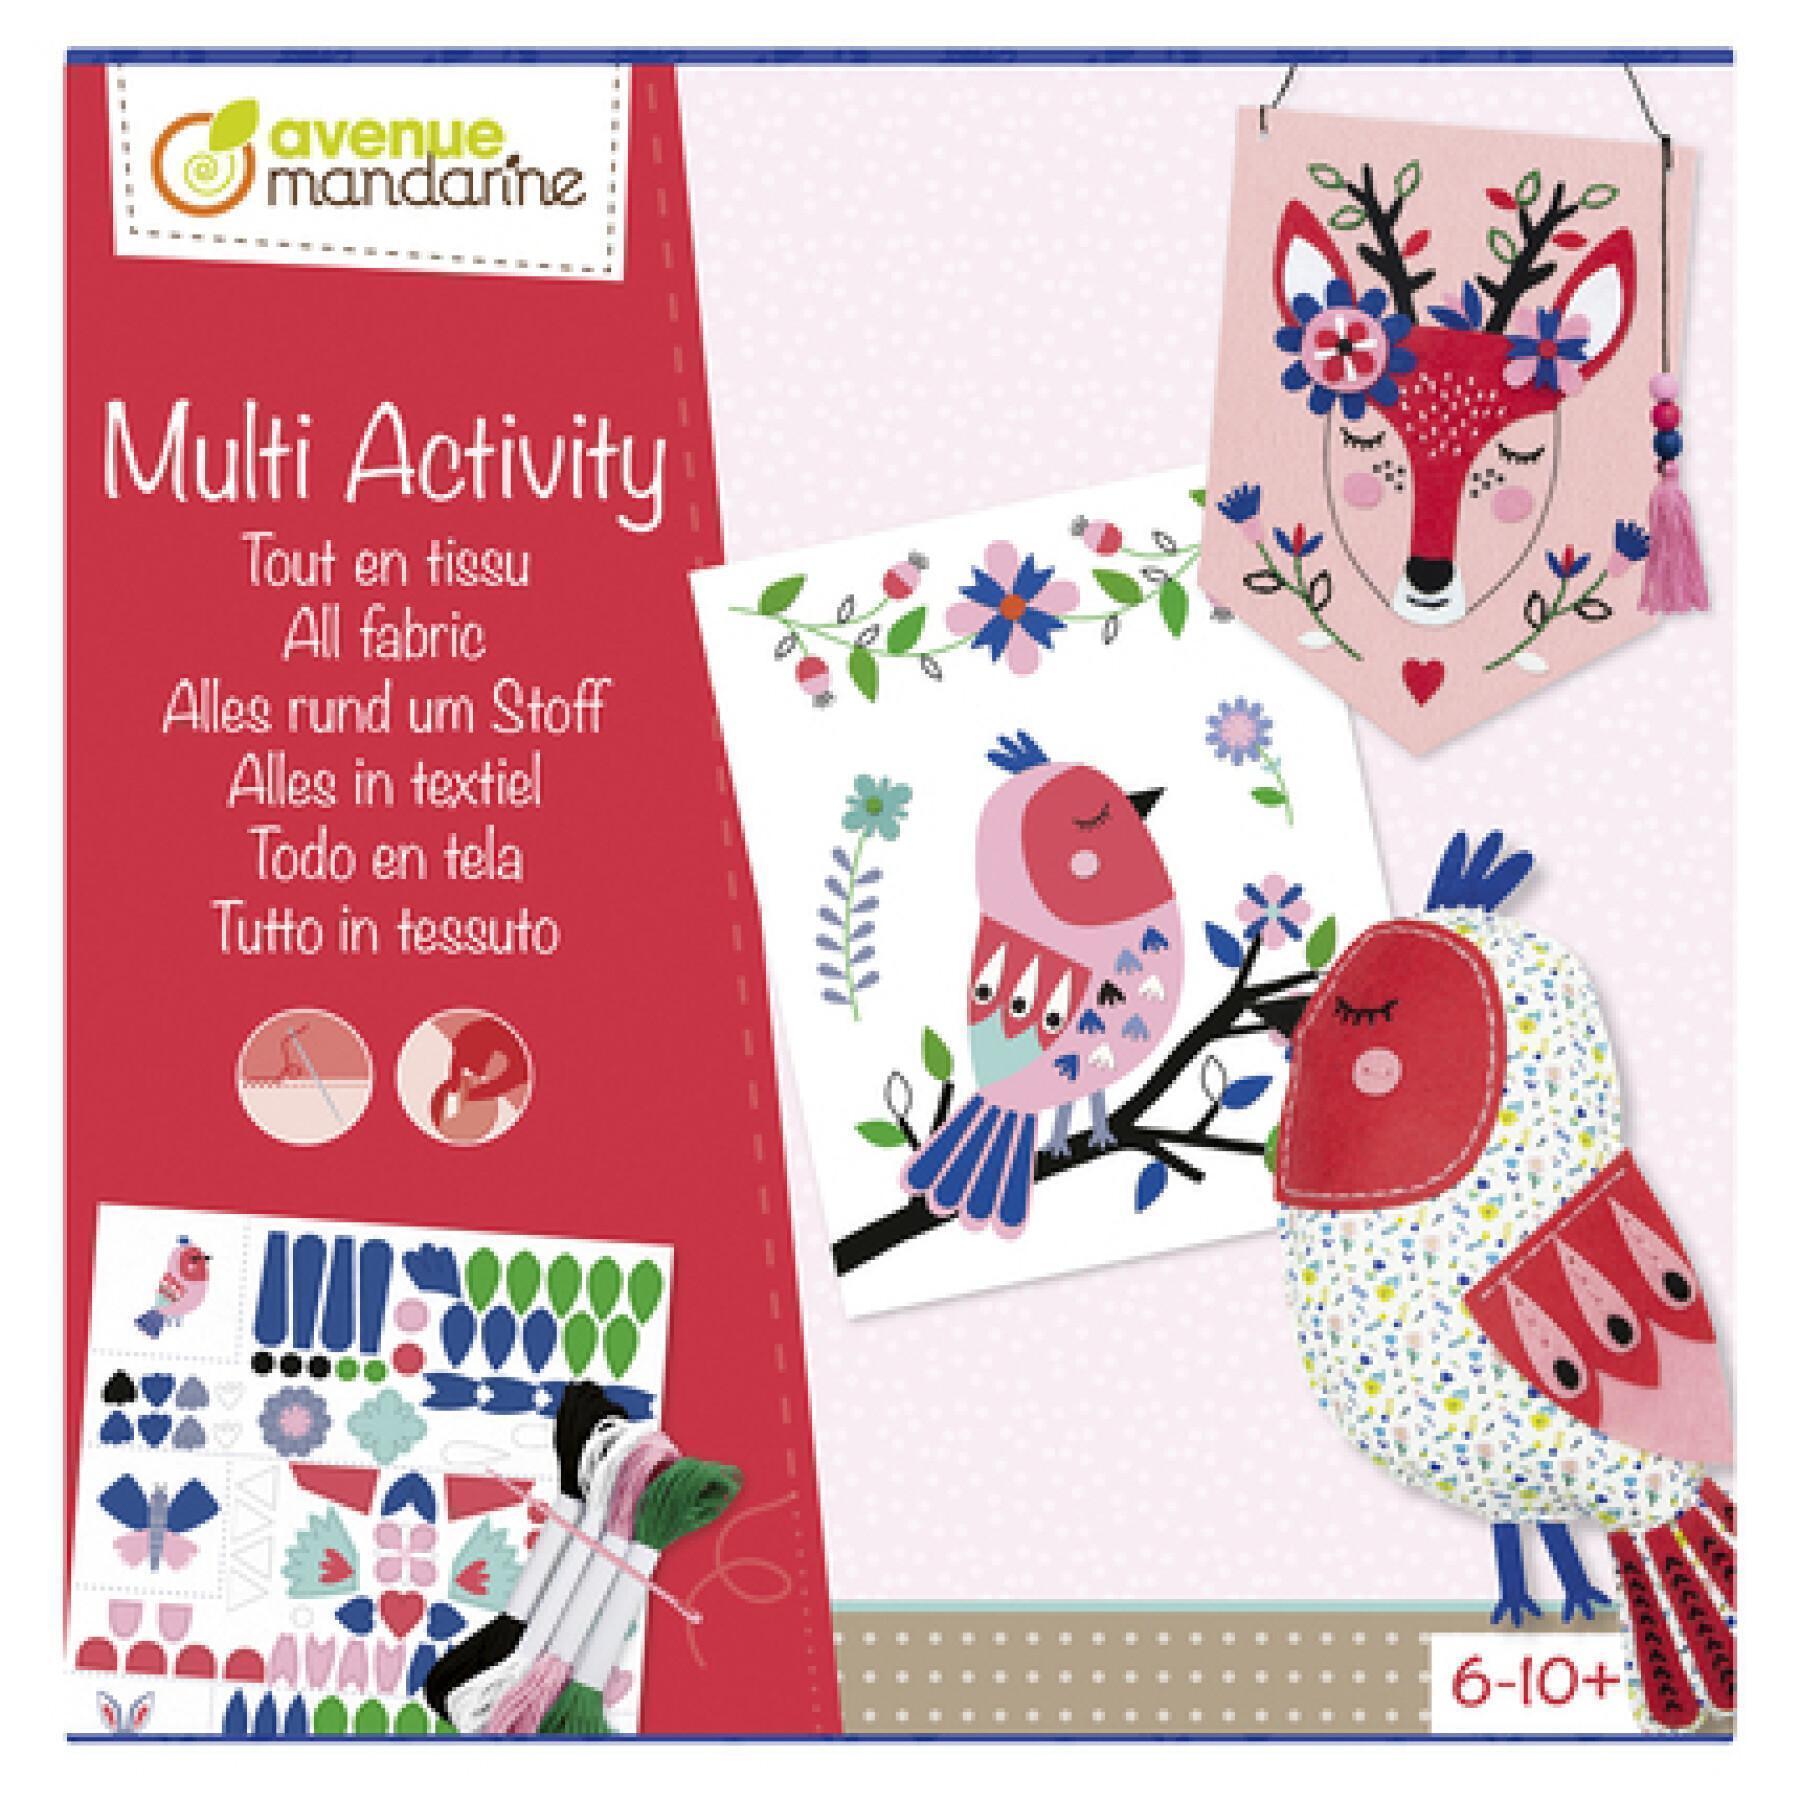 Creative all-fabric box Avenue Mandarine Multi Activity